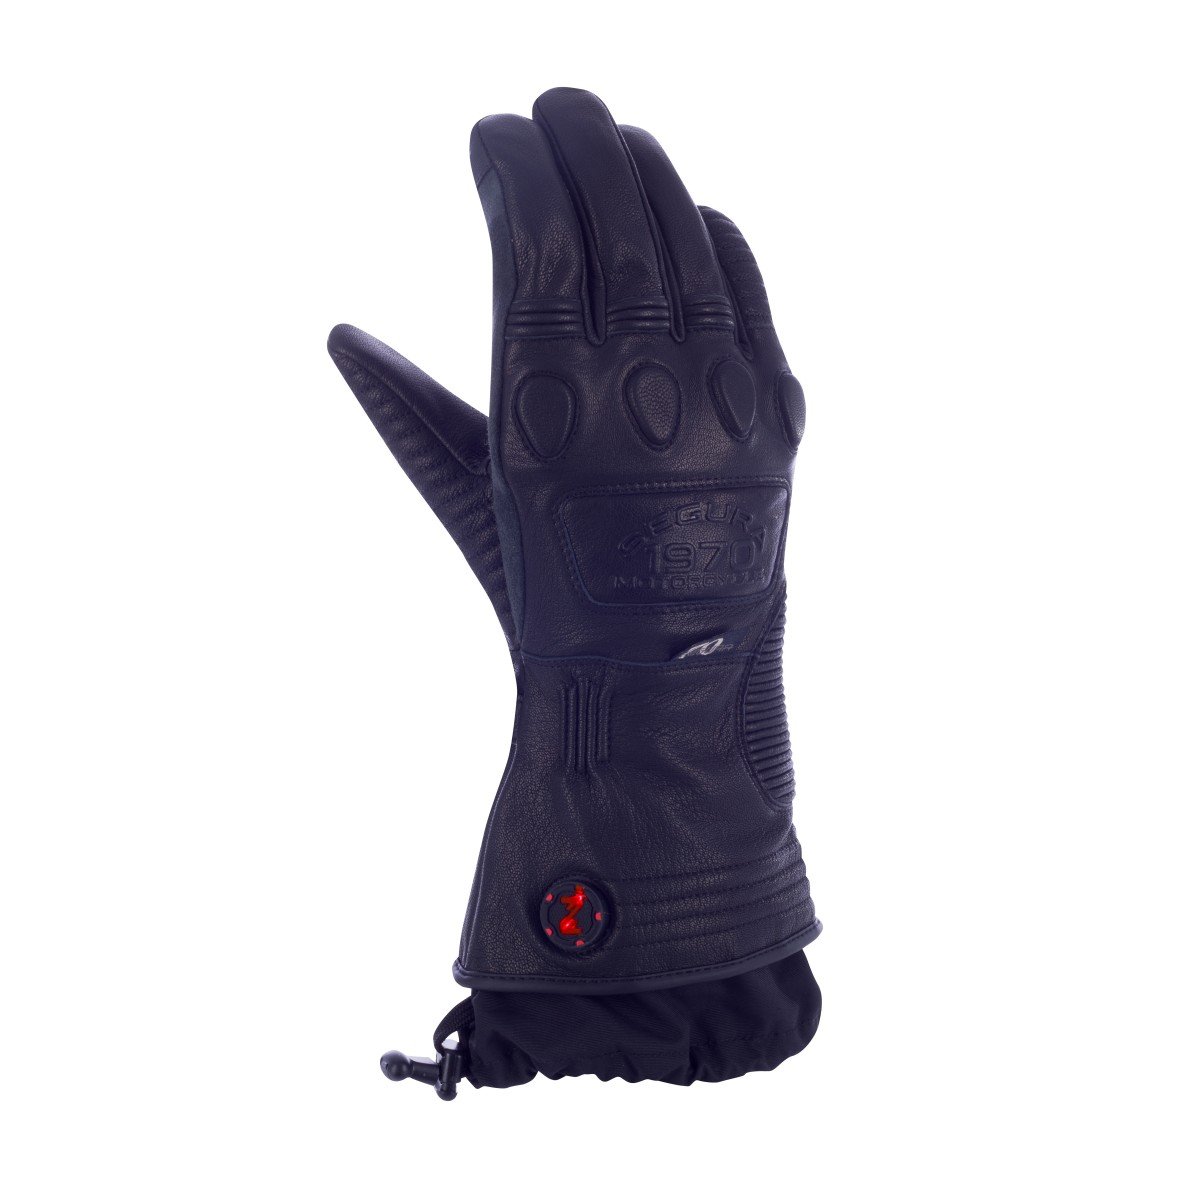 Image of Segura Shiro Black Heated Gloves Size T10 EN